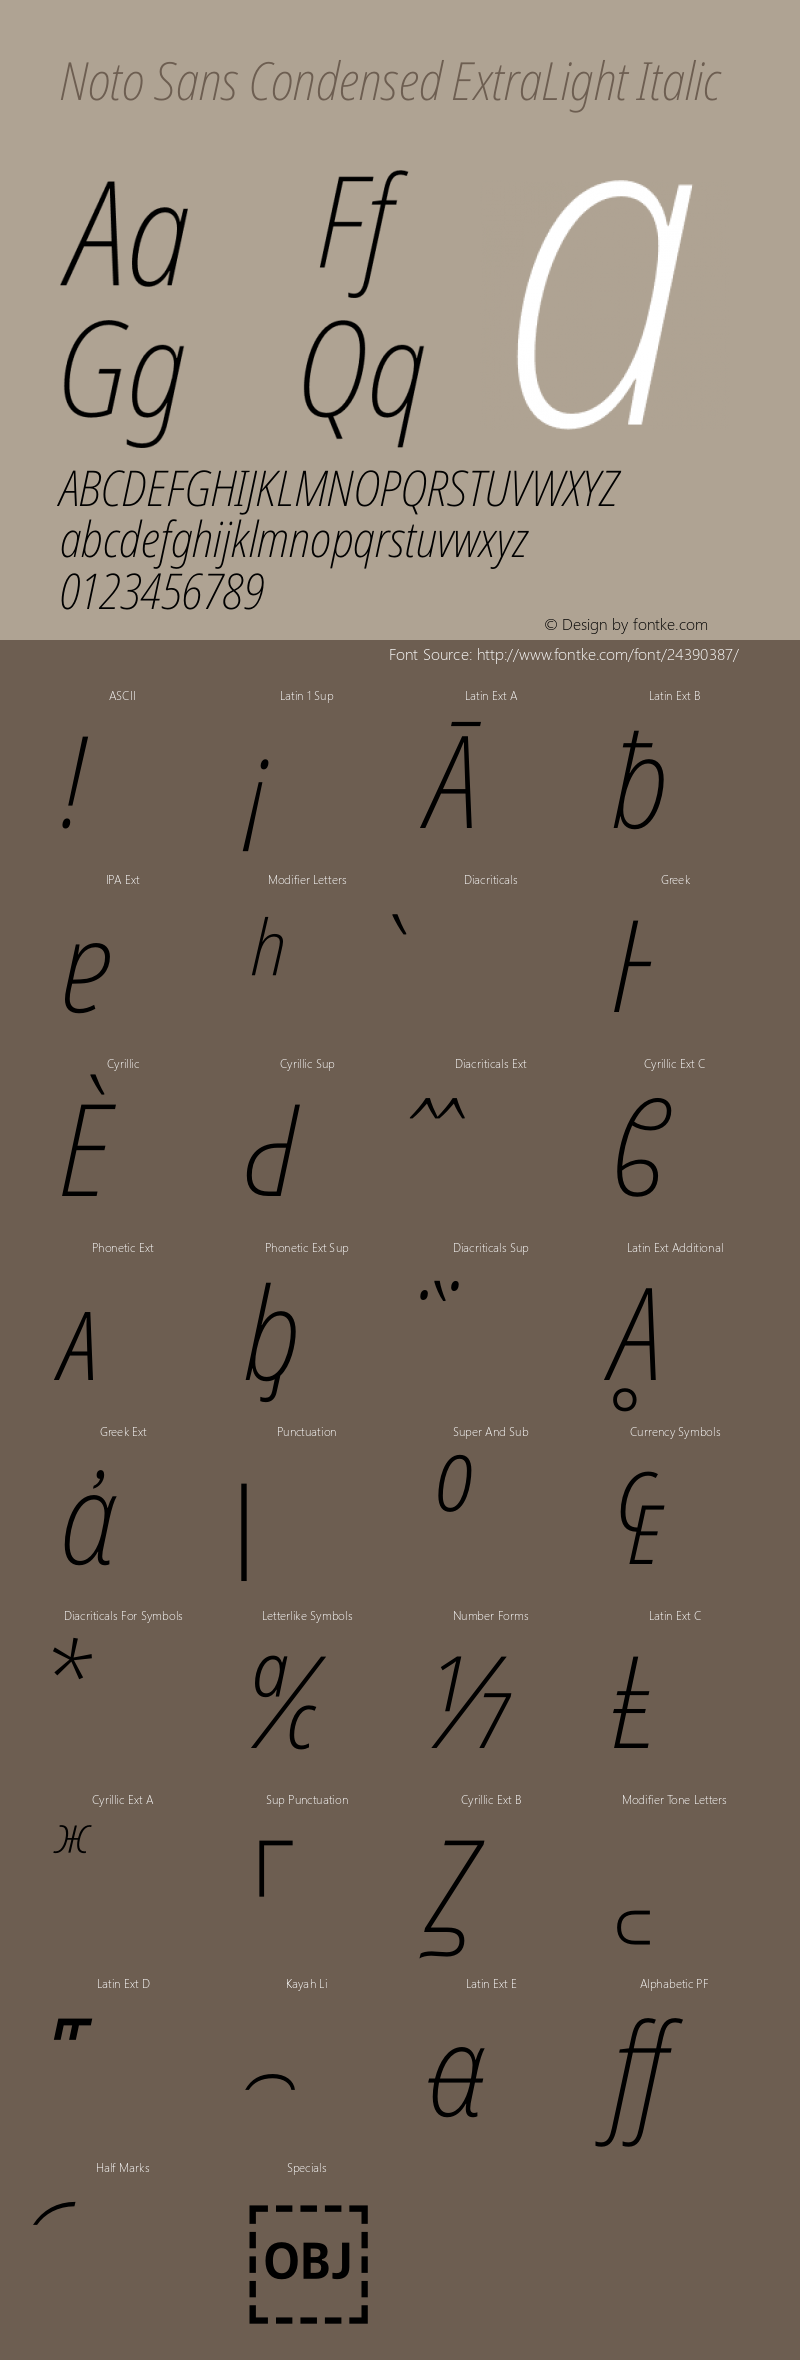 Noto Sans Condensed ExtraLight Italic Version 2.000图片样张